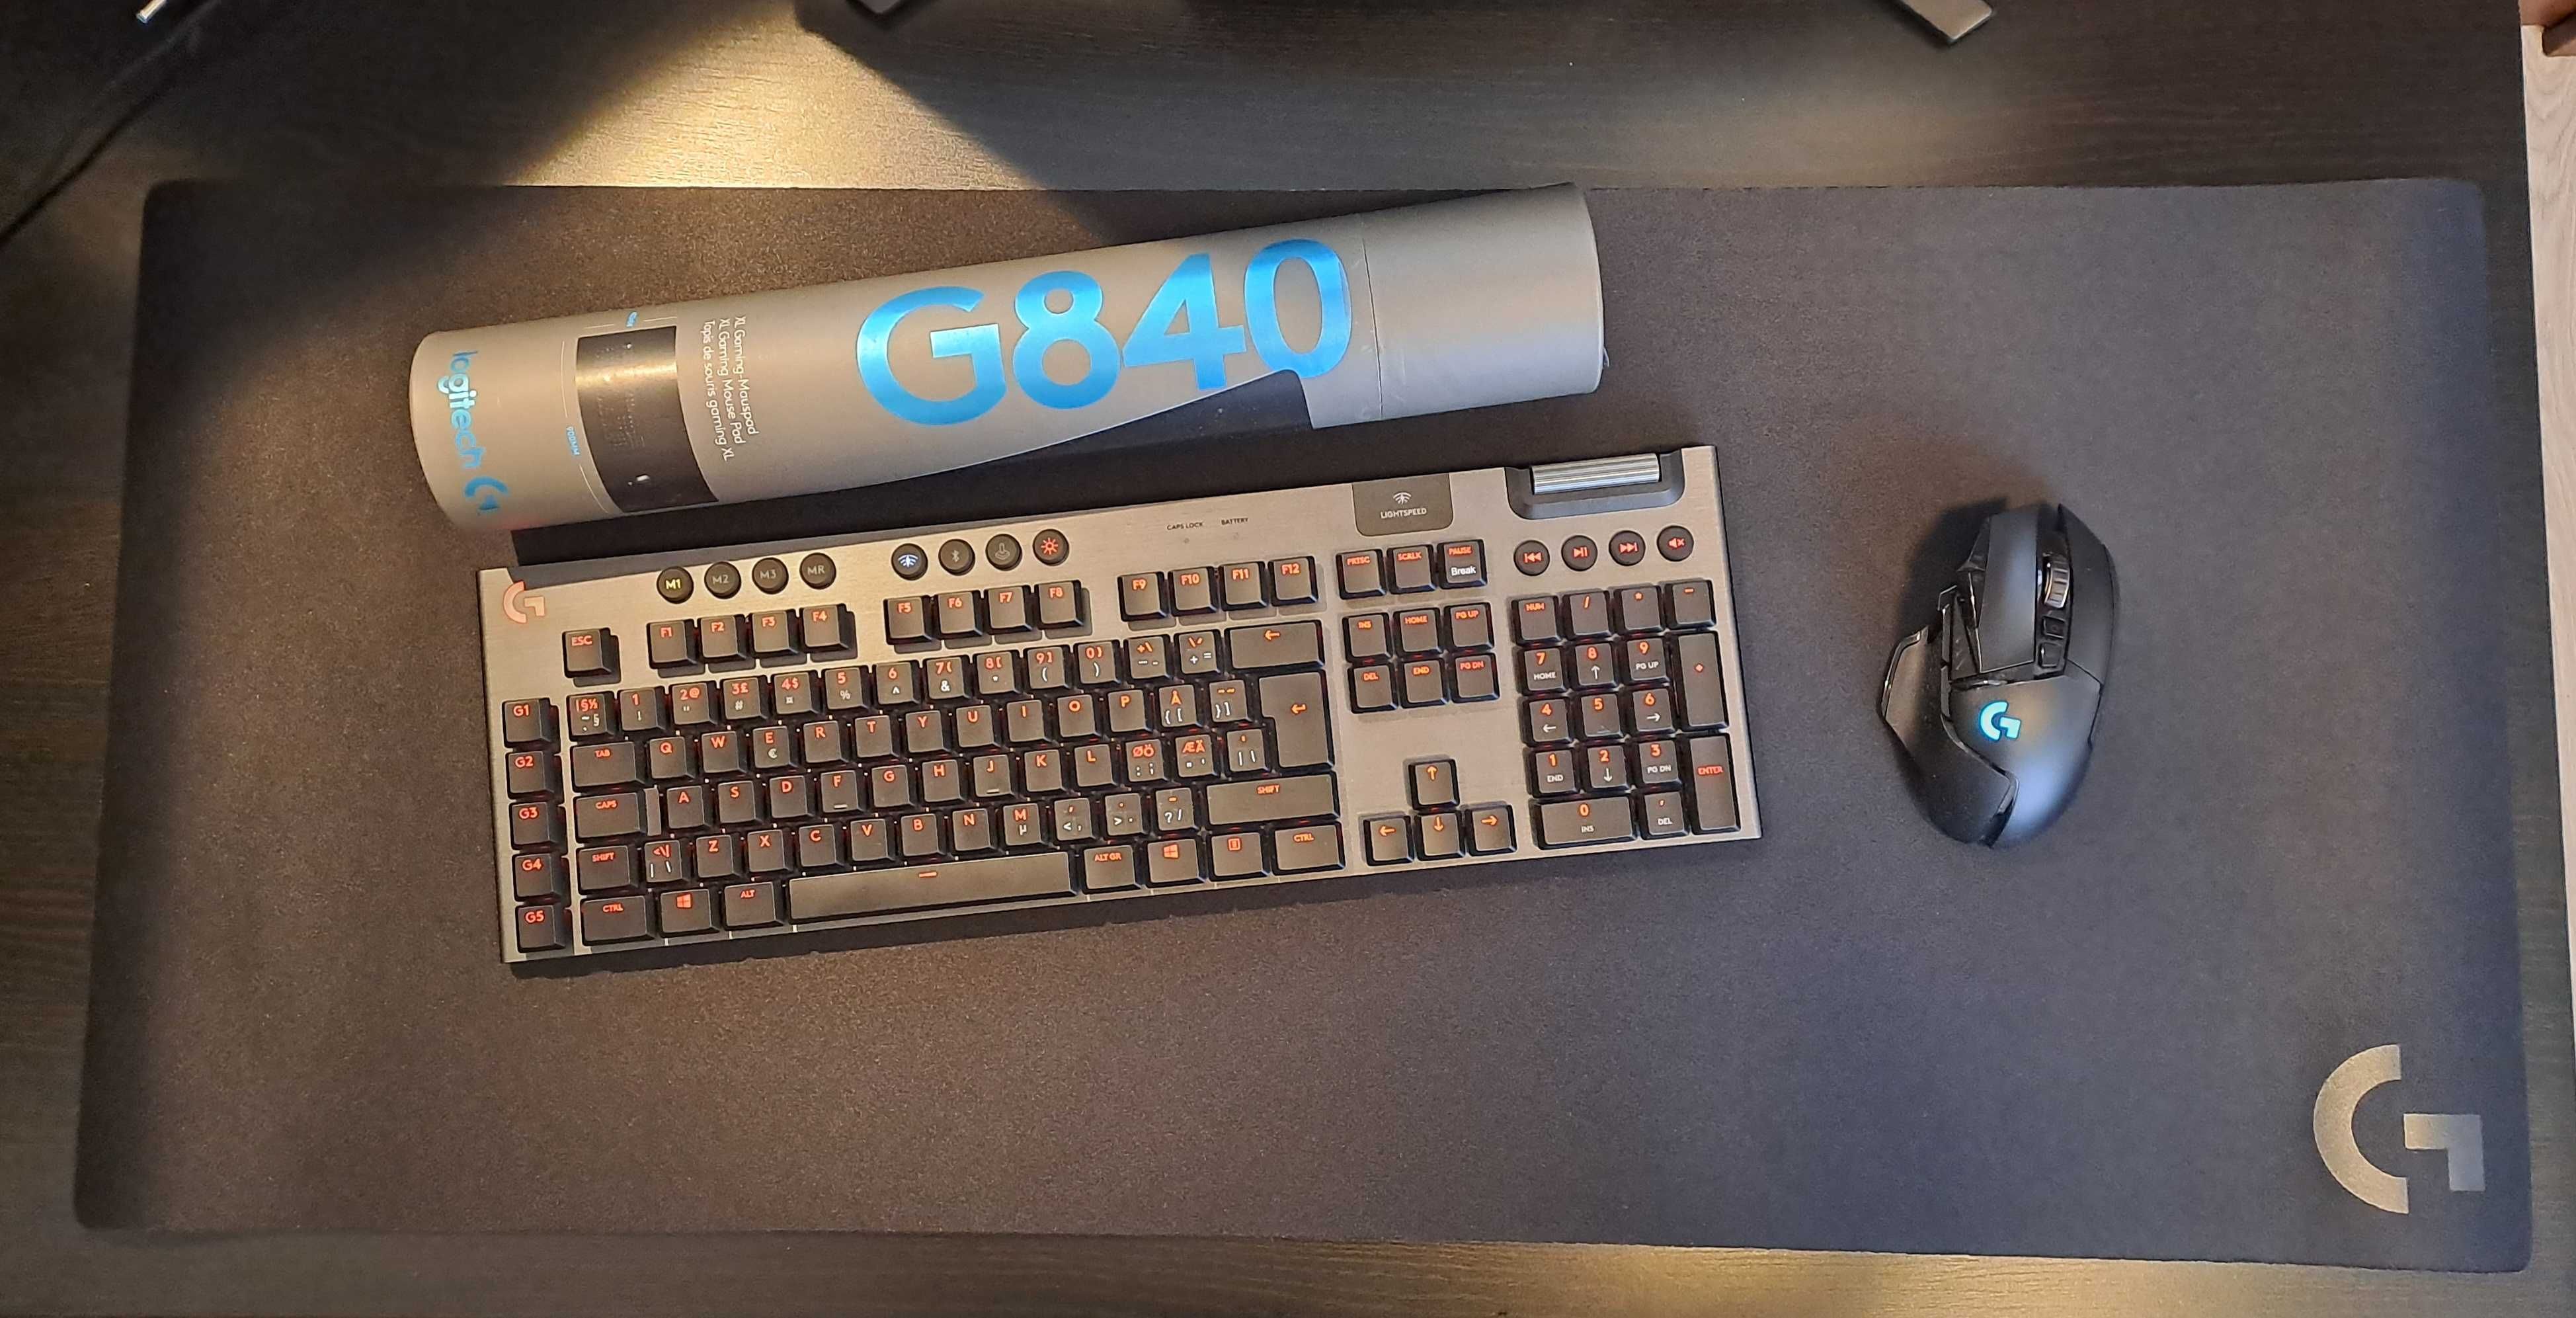 Logitech G840 XL - podkładka pod mysz, klawiaturę [NOWA]